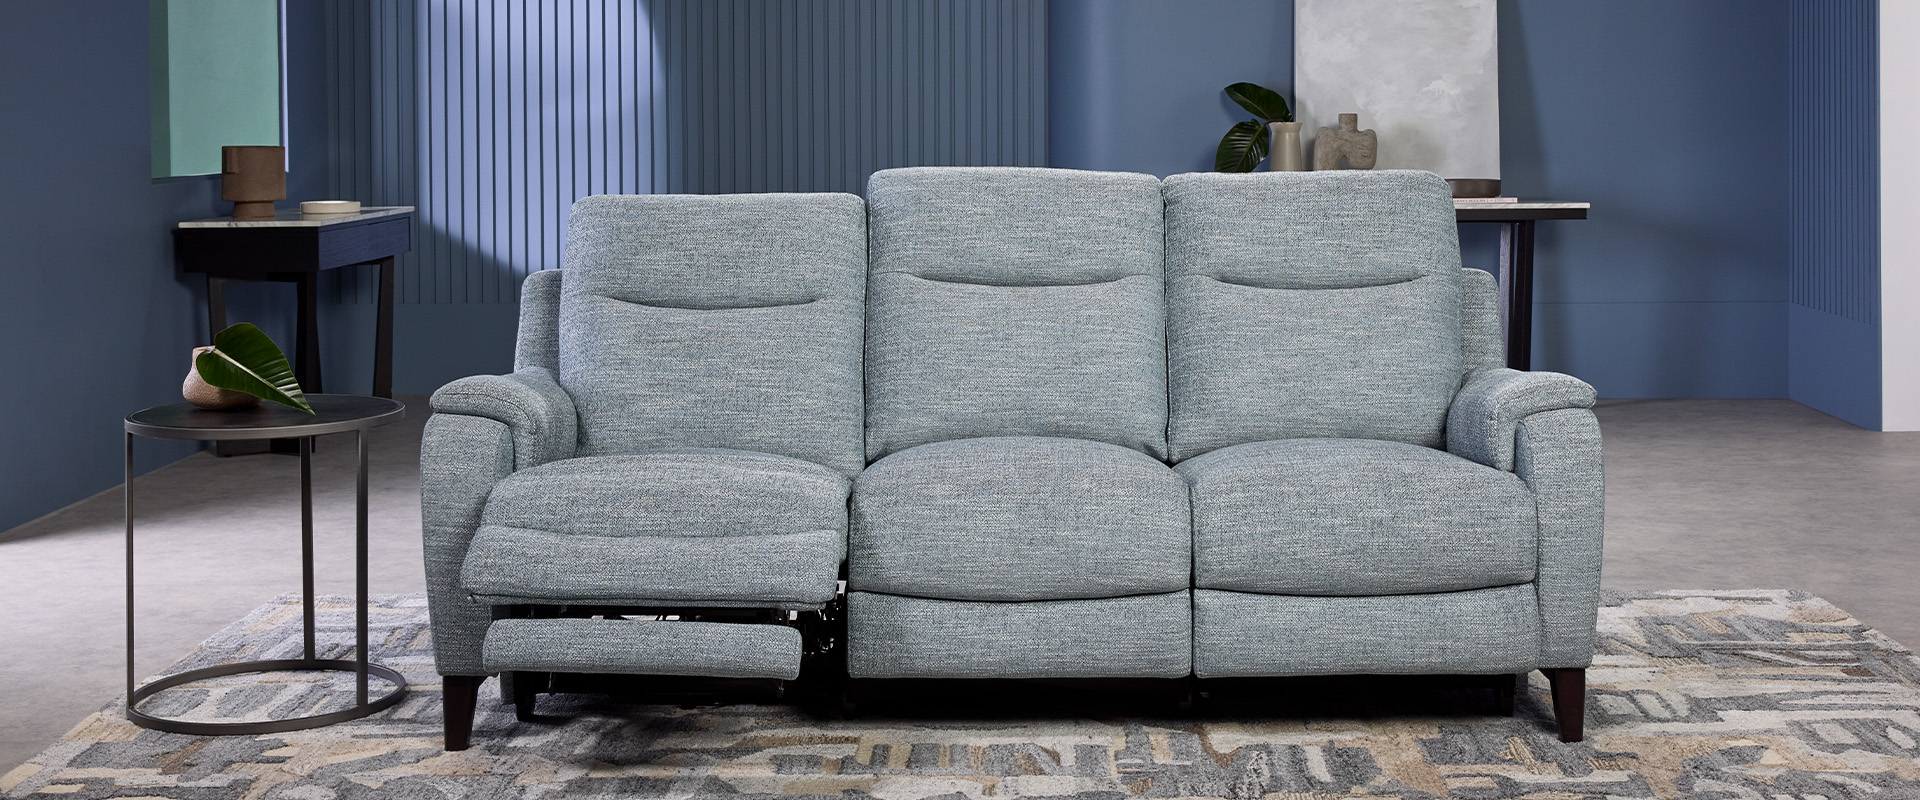 Colorado Fabric Sofa | Recliner Lounge | Nick Scali